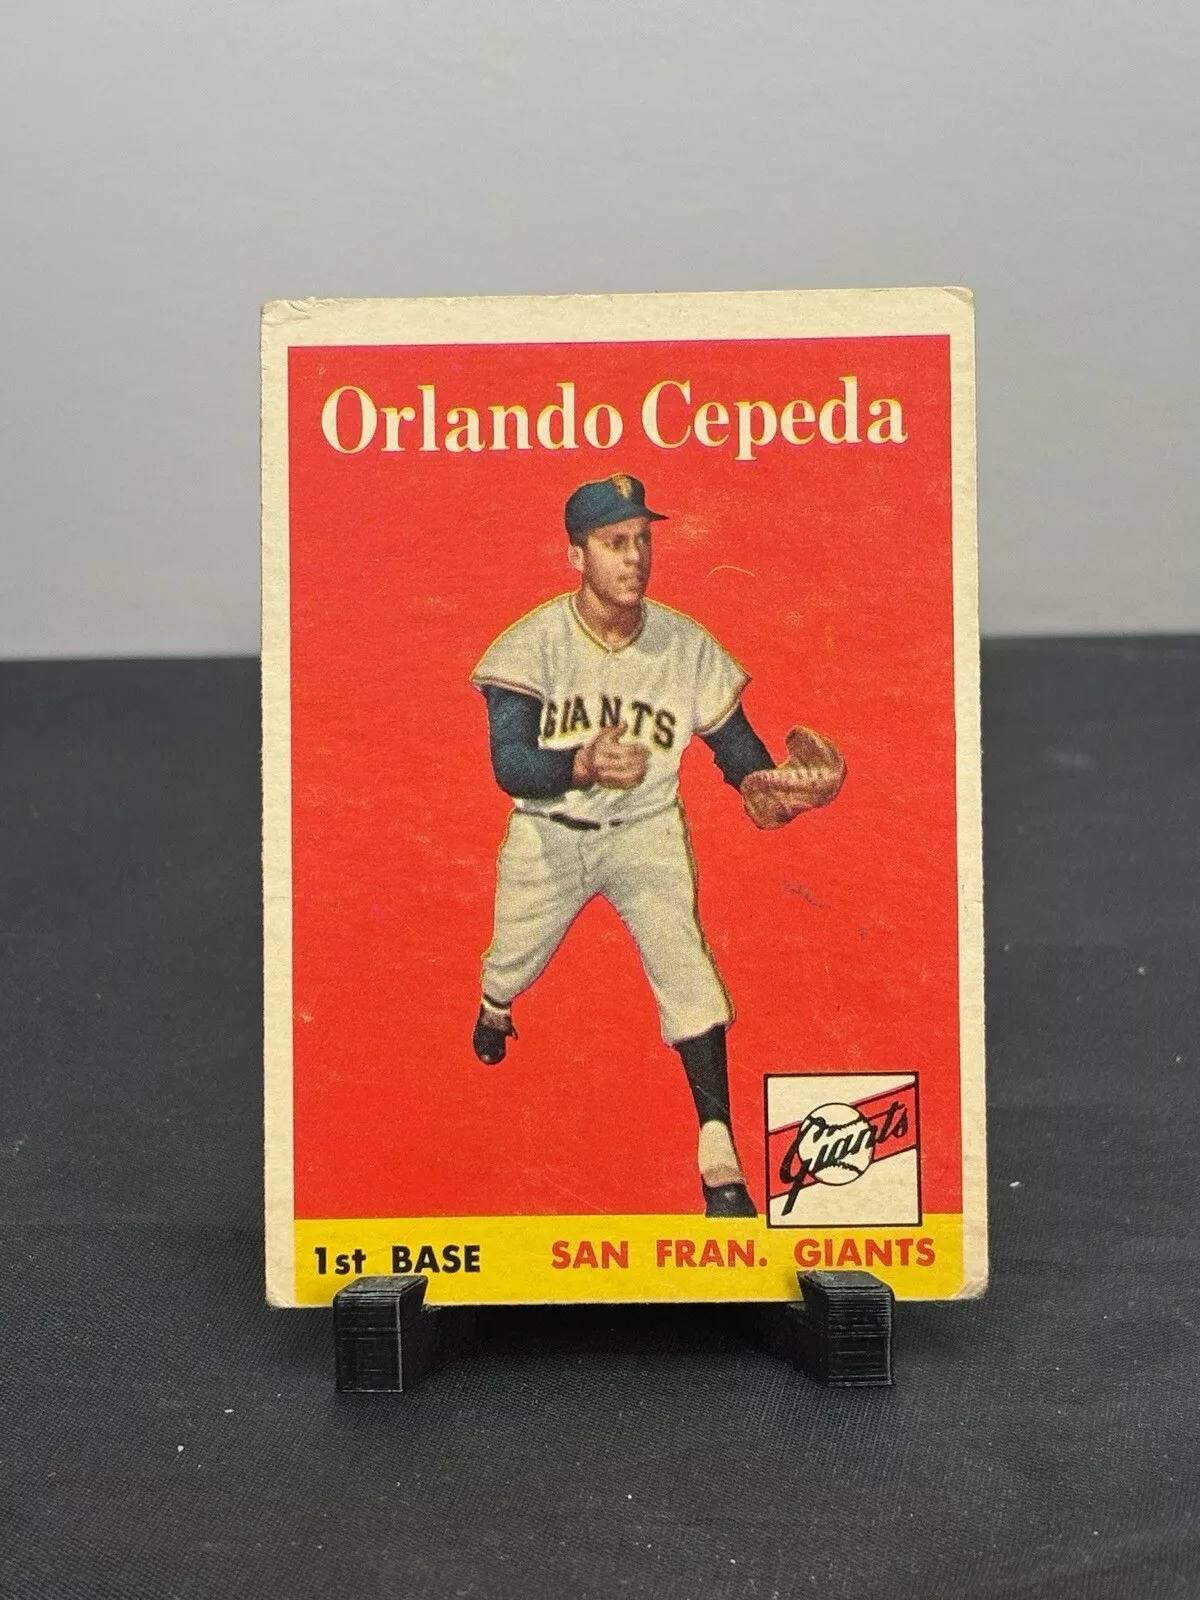 1958 Topps Orlando Cepeda rookie card